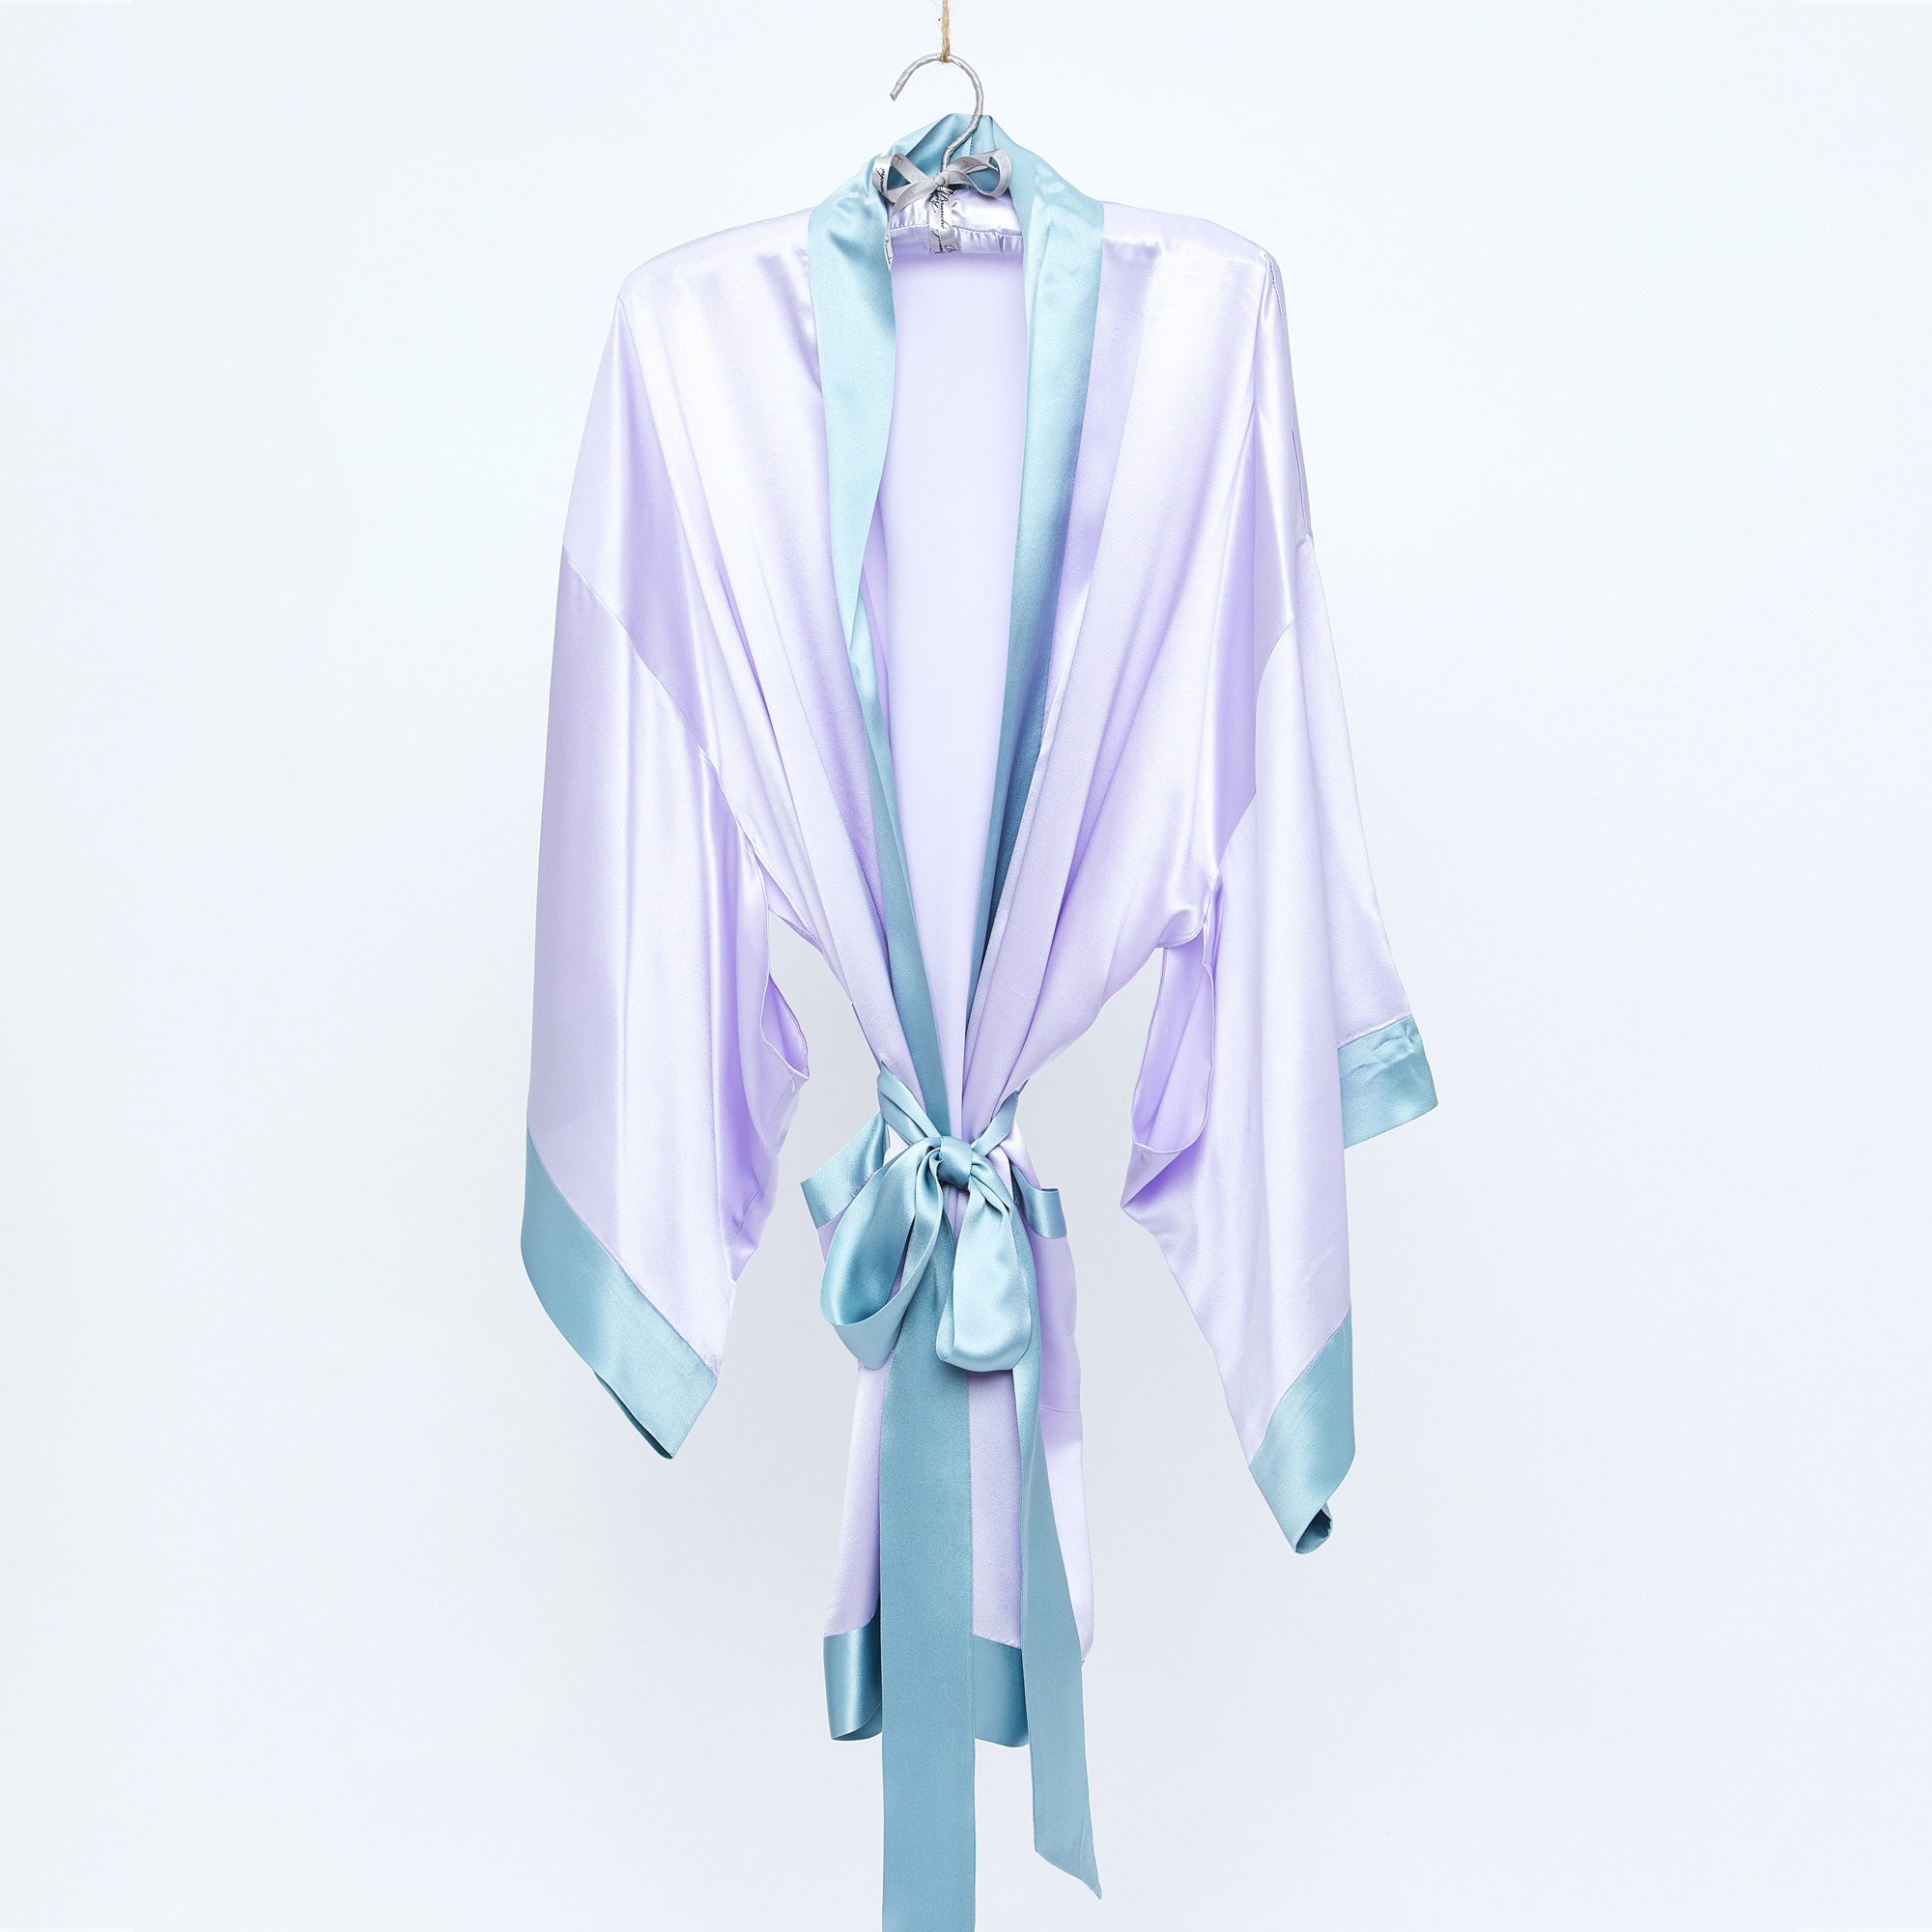 The Geisha Robe - Lavender with Blue Trim